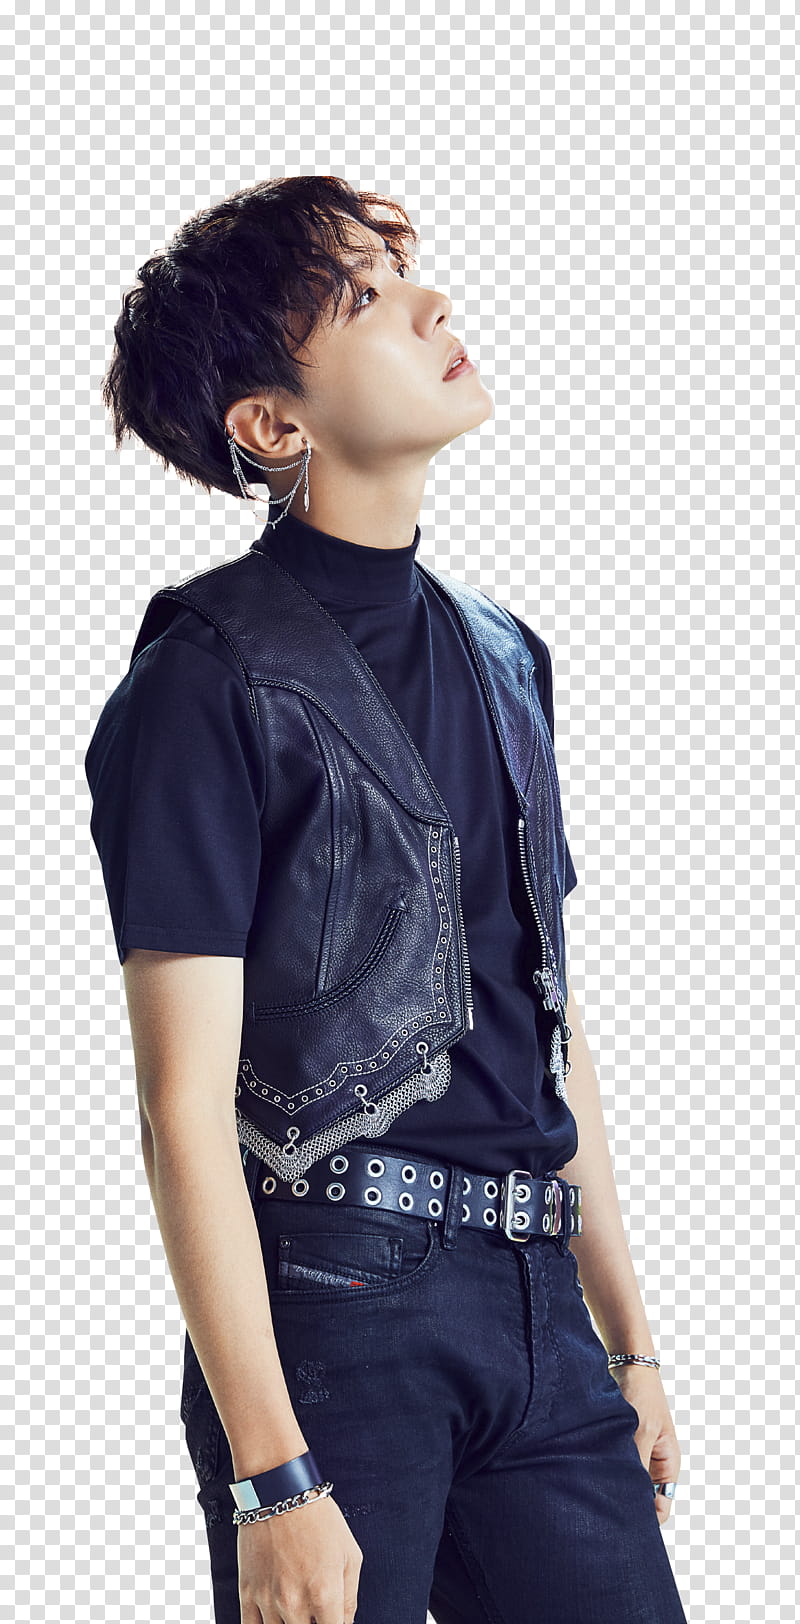 BTS FAKE LOVE Japanese Ver, man wearing black leather vest and black shirt transparent background PNG clipart